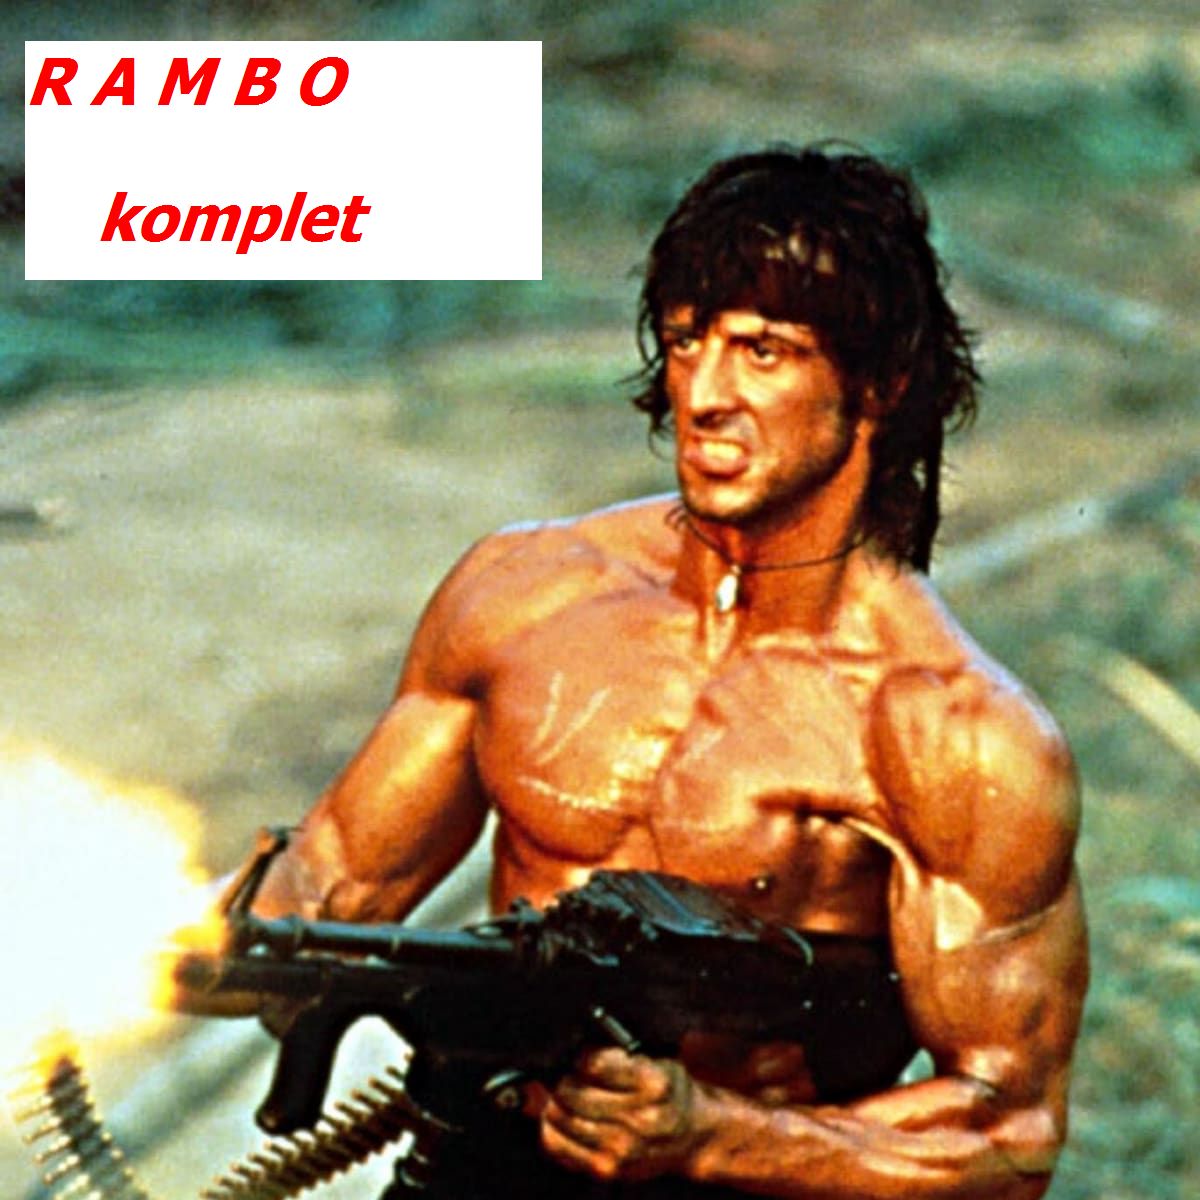 Stiahni si Filmy CZ/SK dabing Rambo (filmovy komplet,1080p,CZ) = CSFD 85%